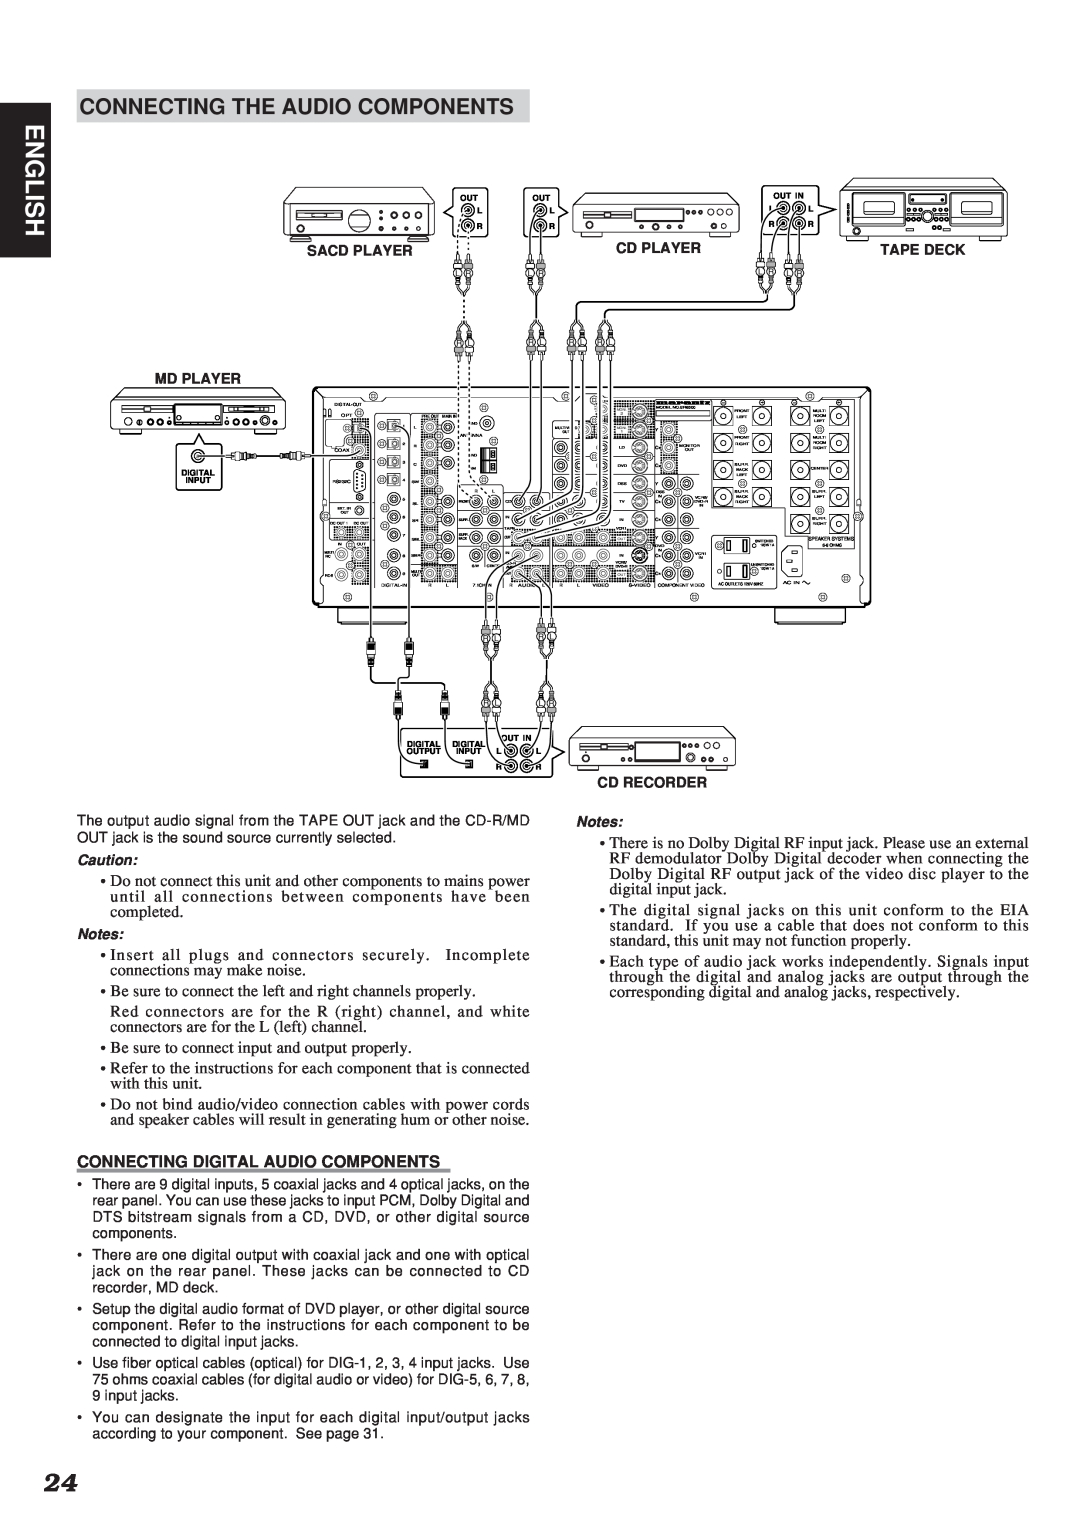 Marantz SR9300 manual English, Connecting The Audio Components, Connecting Digital Audio Components 